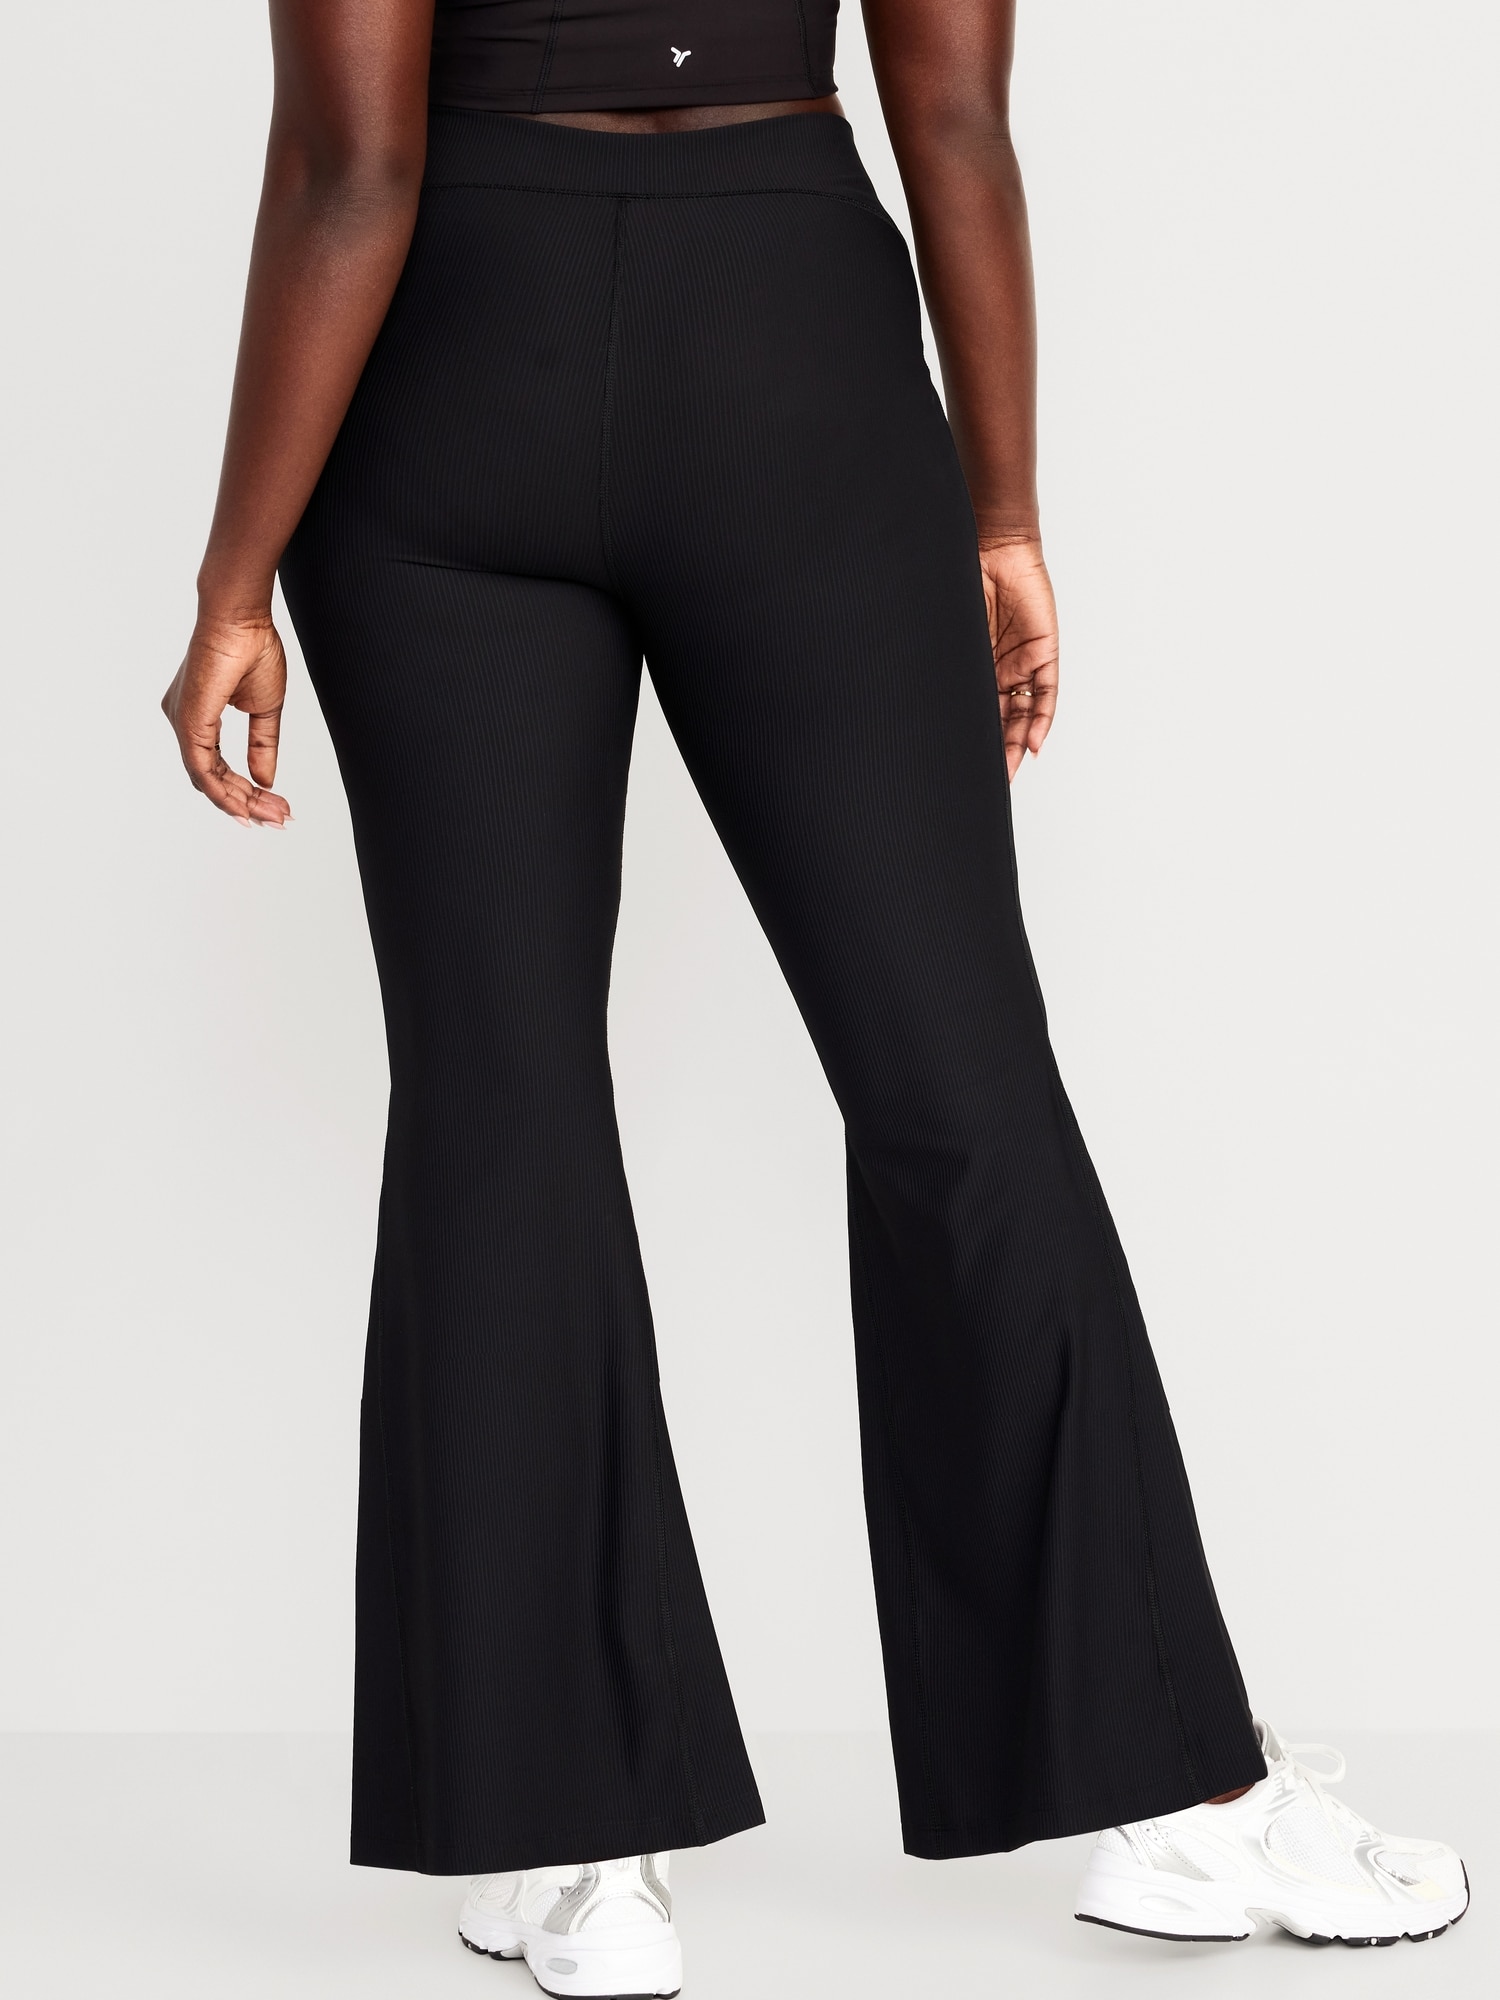 Pulp women's mid-rise black flare pants XL loose - Depop